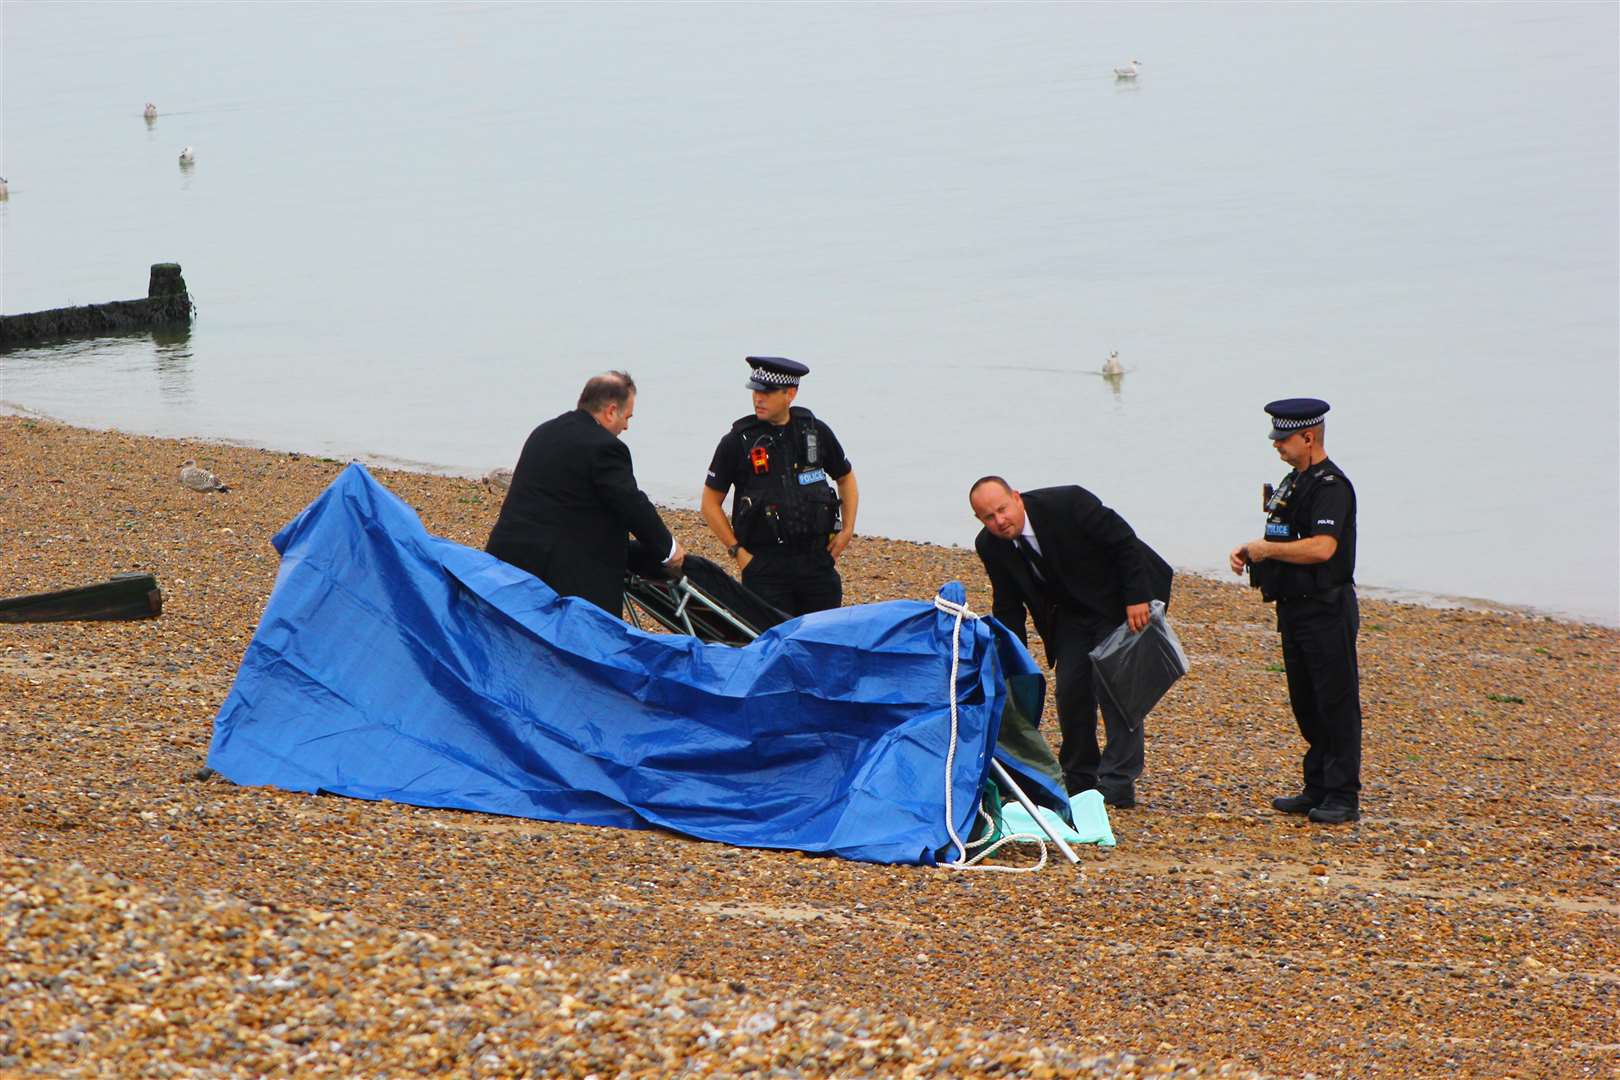 Police at the scene on Herne Bay beach